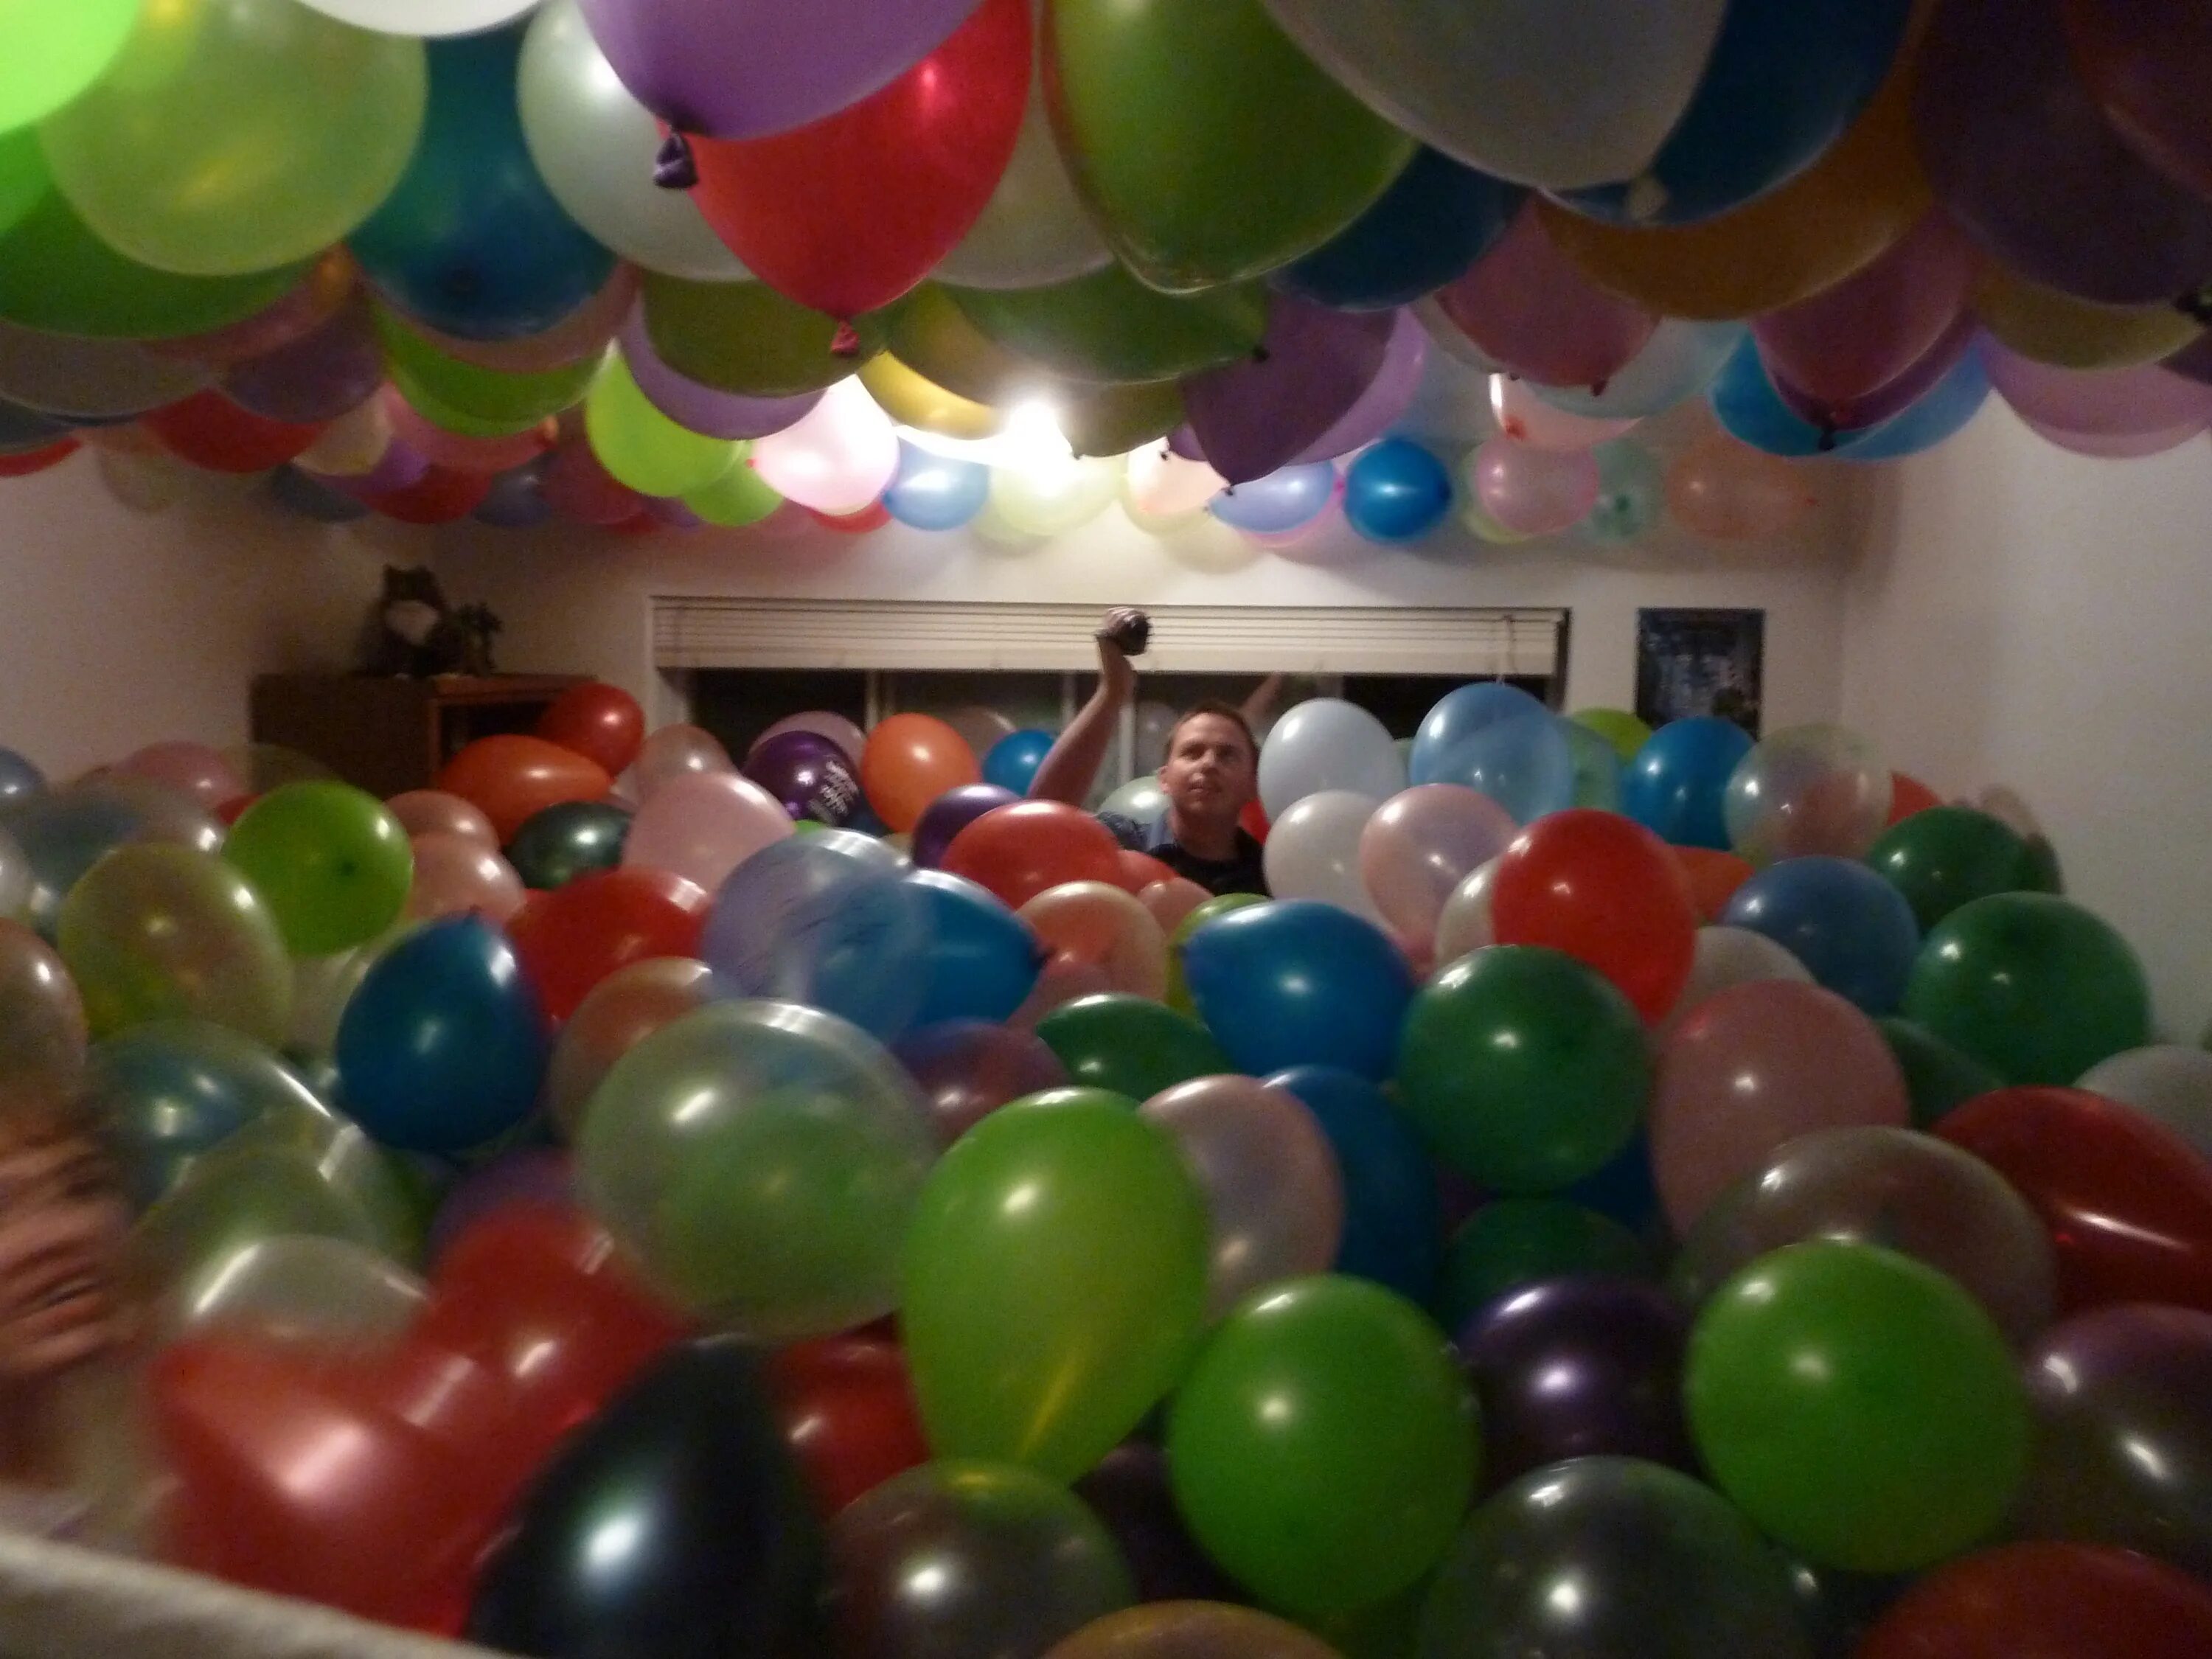 Сто шарами. Комната с шариками на день рождения. Много шариков в комнате. Комната в гелевых шарах. Комната в надувных шарах.